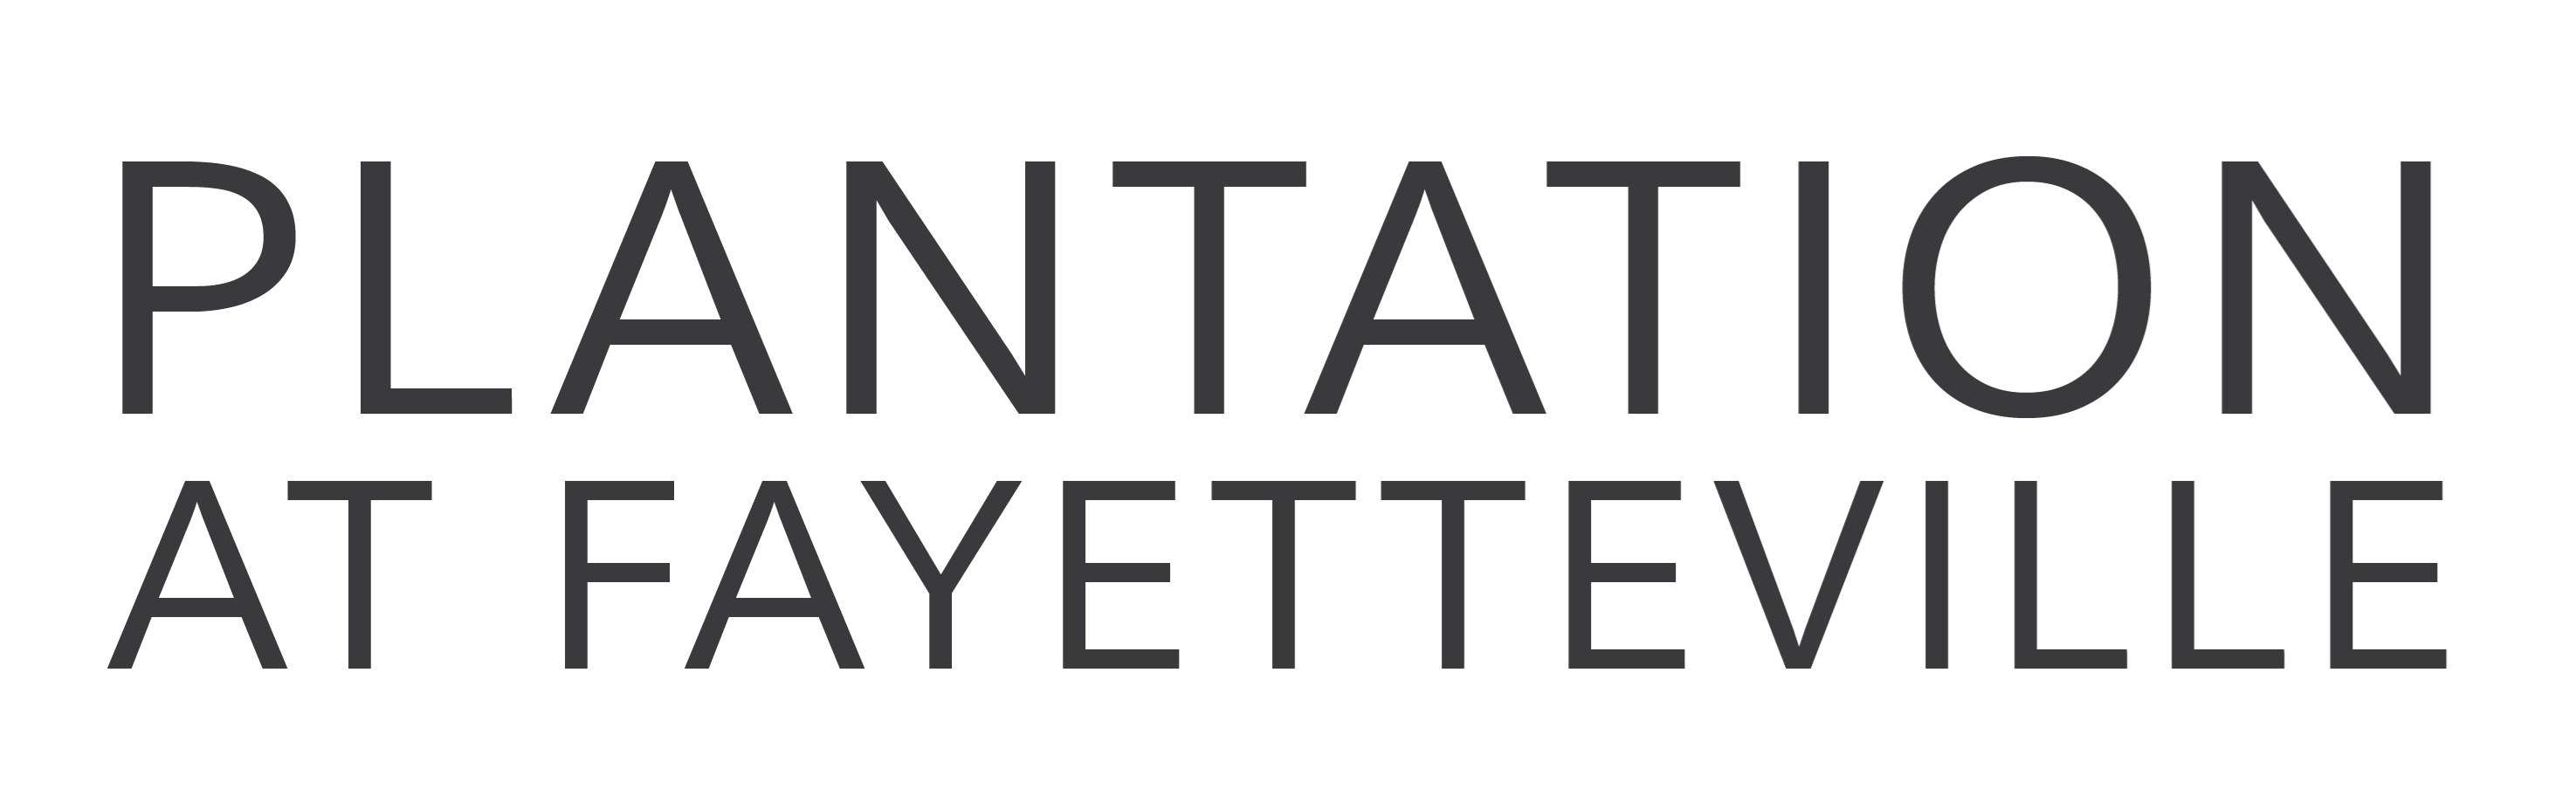 Fayetteville Logo - Plantation at Fayetteville | Apartments in Fayetteville, NC